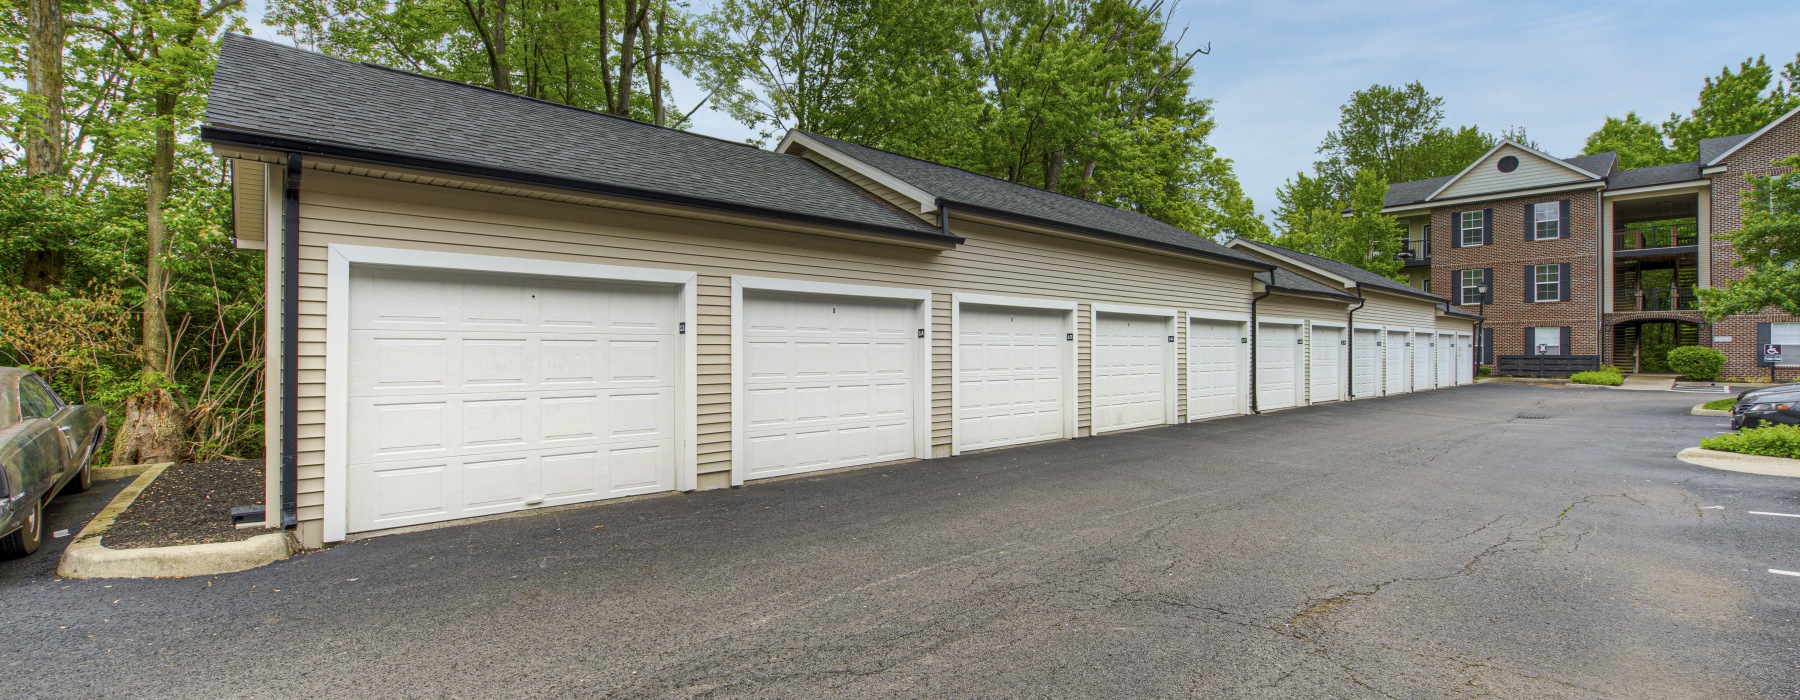 exterior photo of detached garages